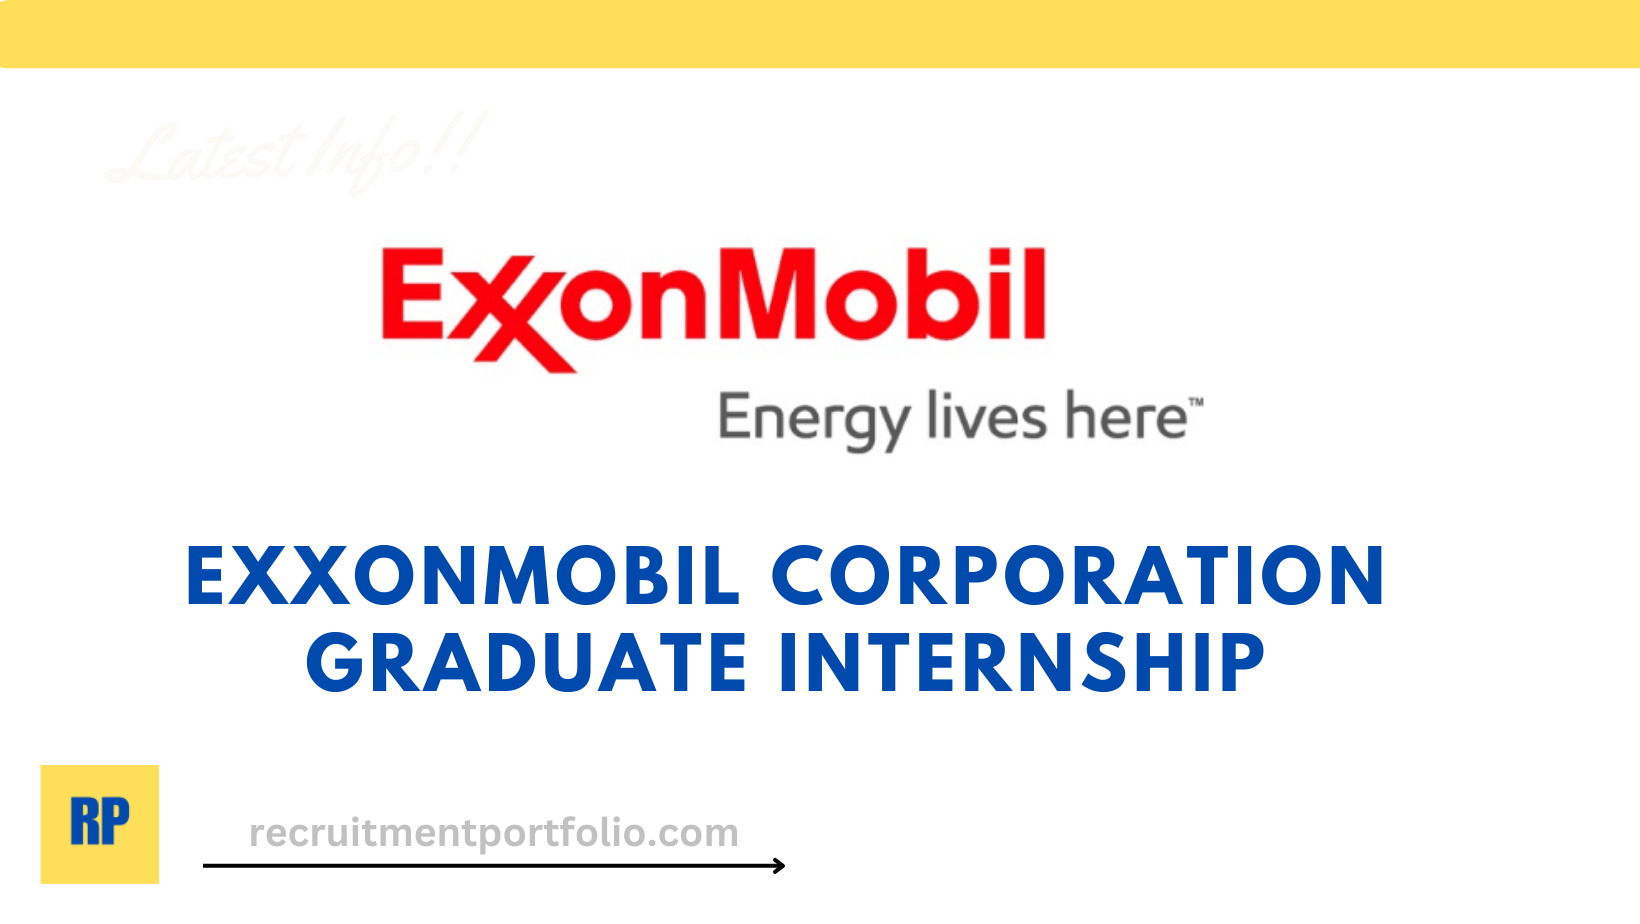 ExxonMobil Corporation Graduate